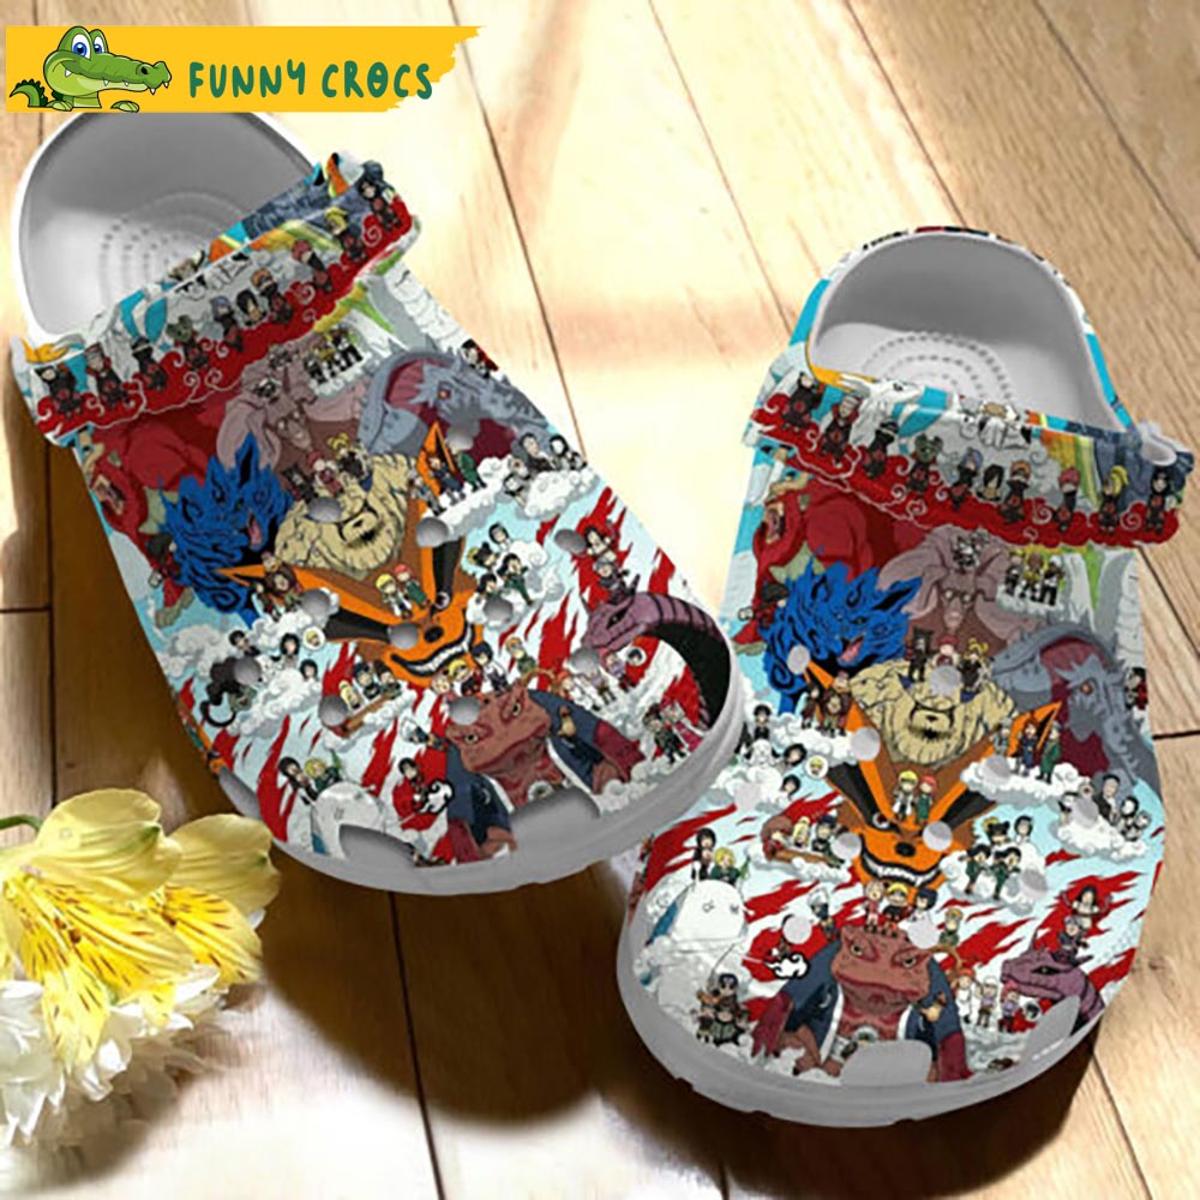 Limited Edition Naruto Crocs Shoes